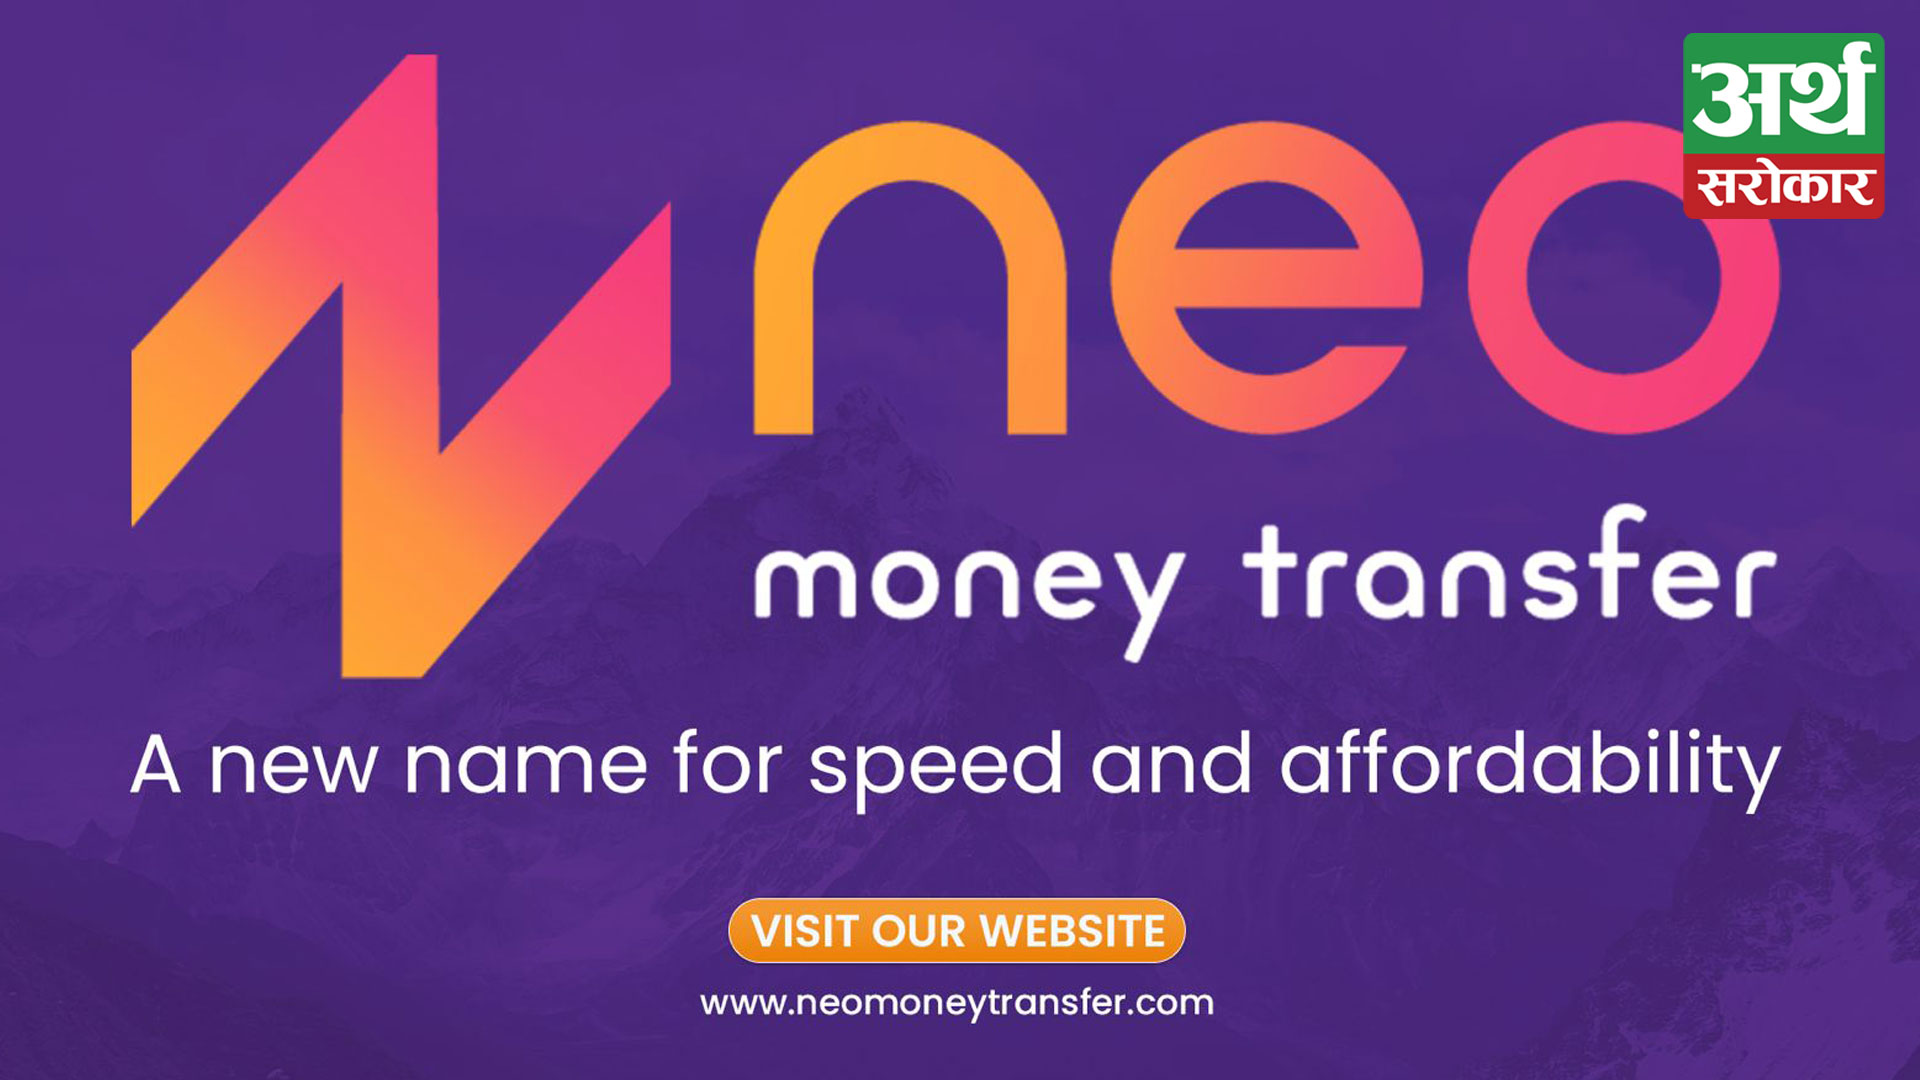 Panos Remit Undergoes Rebranding as Neo Money Transfer